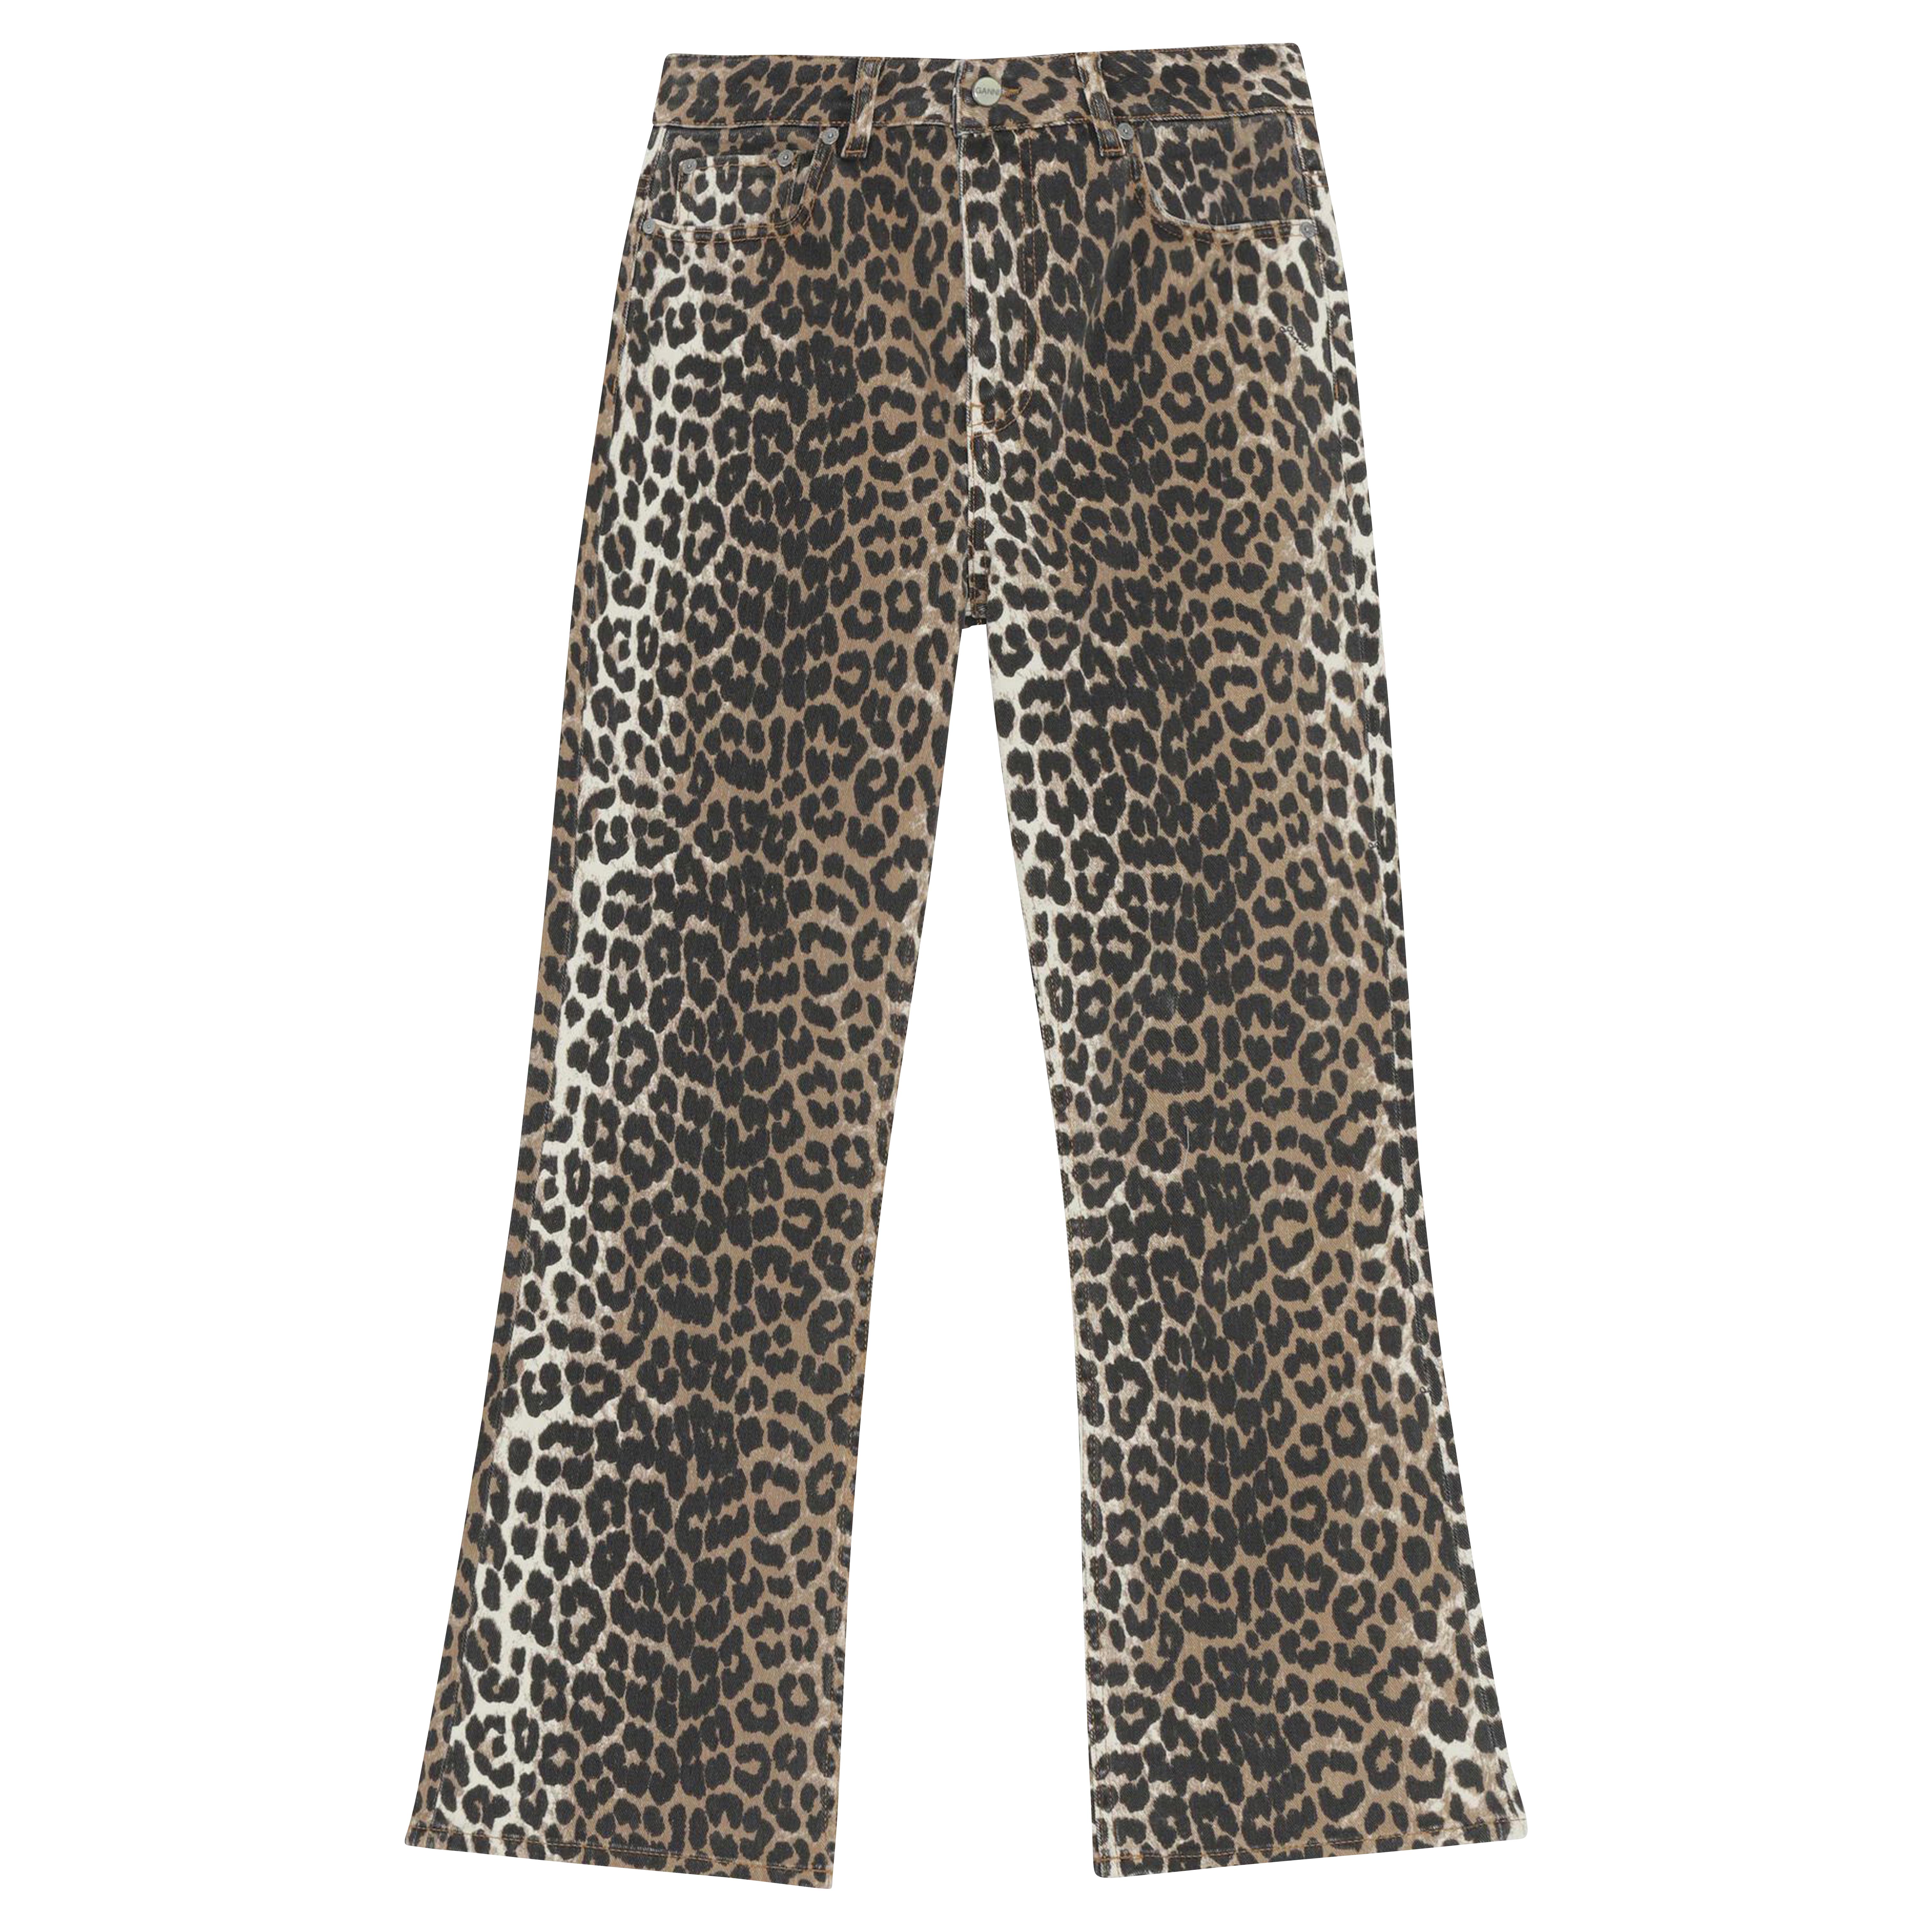 Ganni Betzy Cropped Jeans in Leopard 27